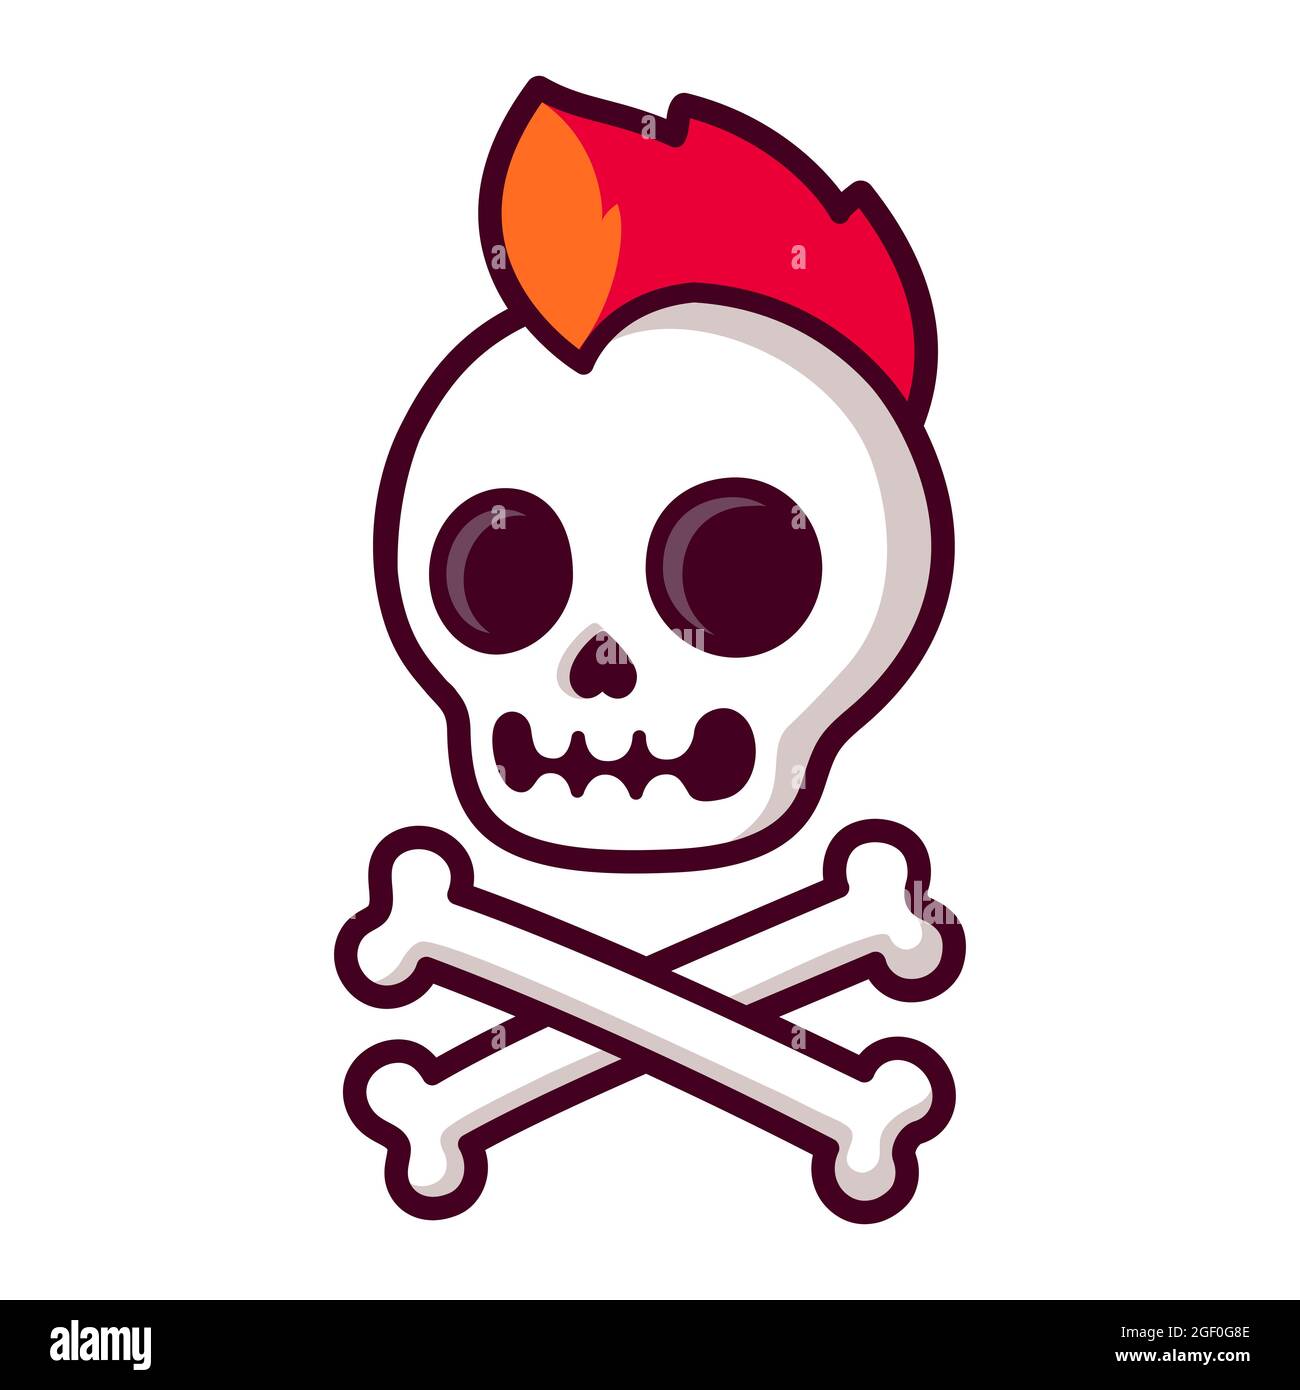 Cool cartoon punk rock skull and crossbones with bright red mohawk. Comic style Jolly Roger symbol. Vector clip art illustration. Stock Vector